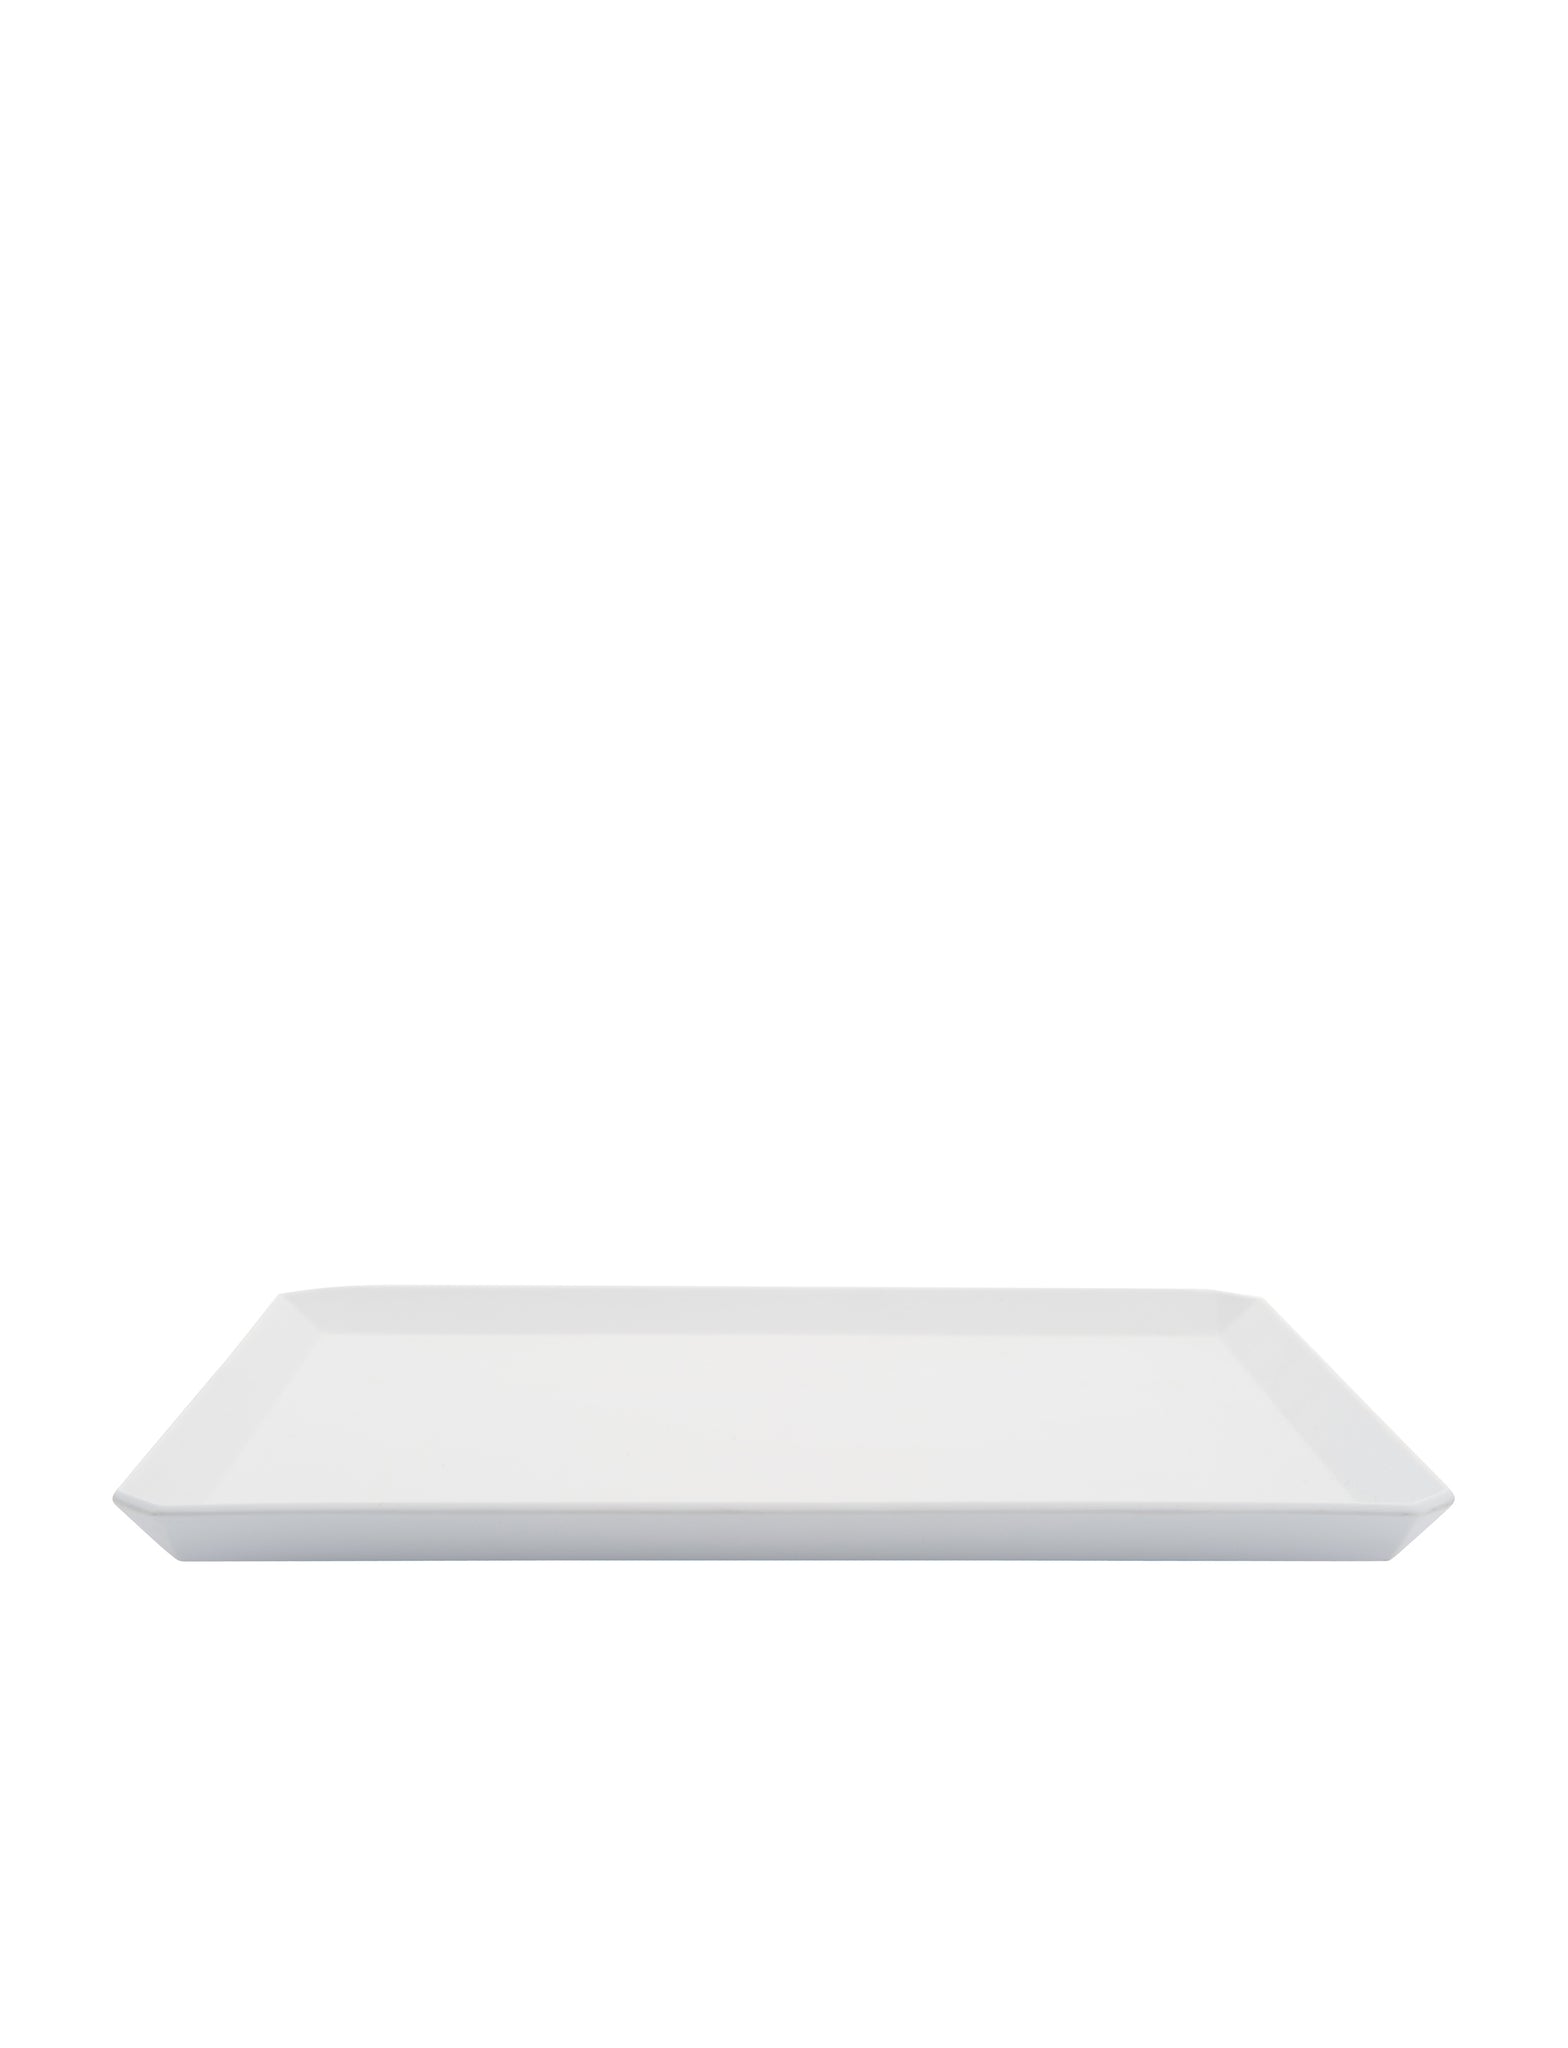 TY Square Plate 270 unglazed grey